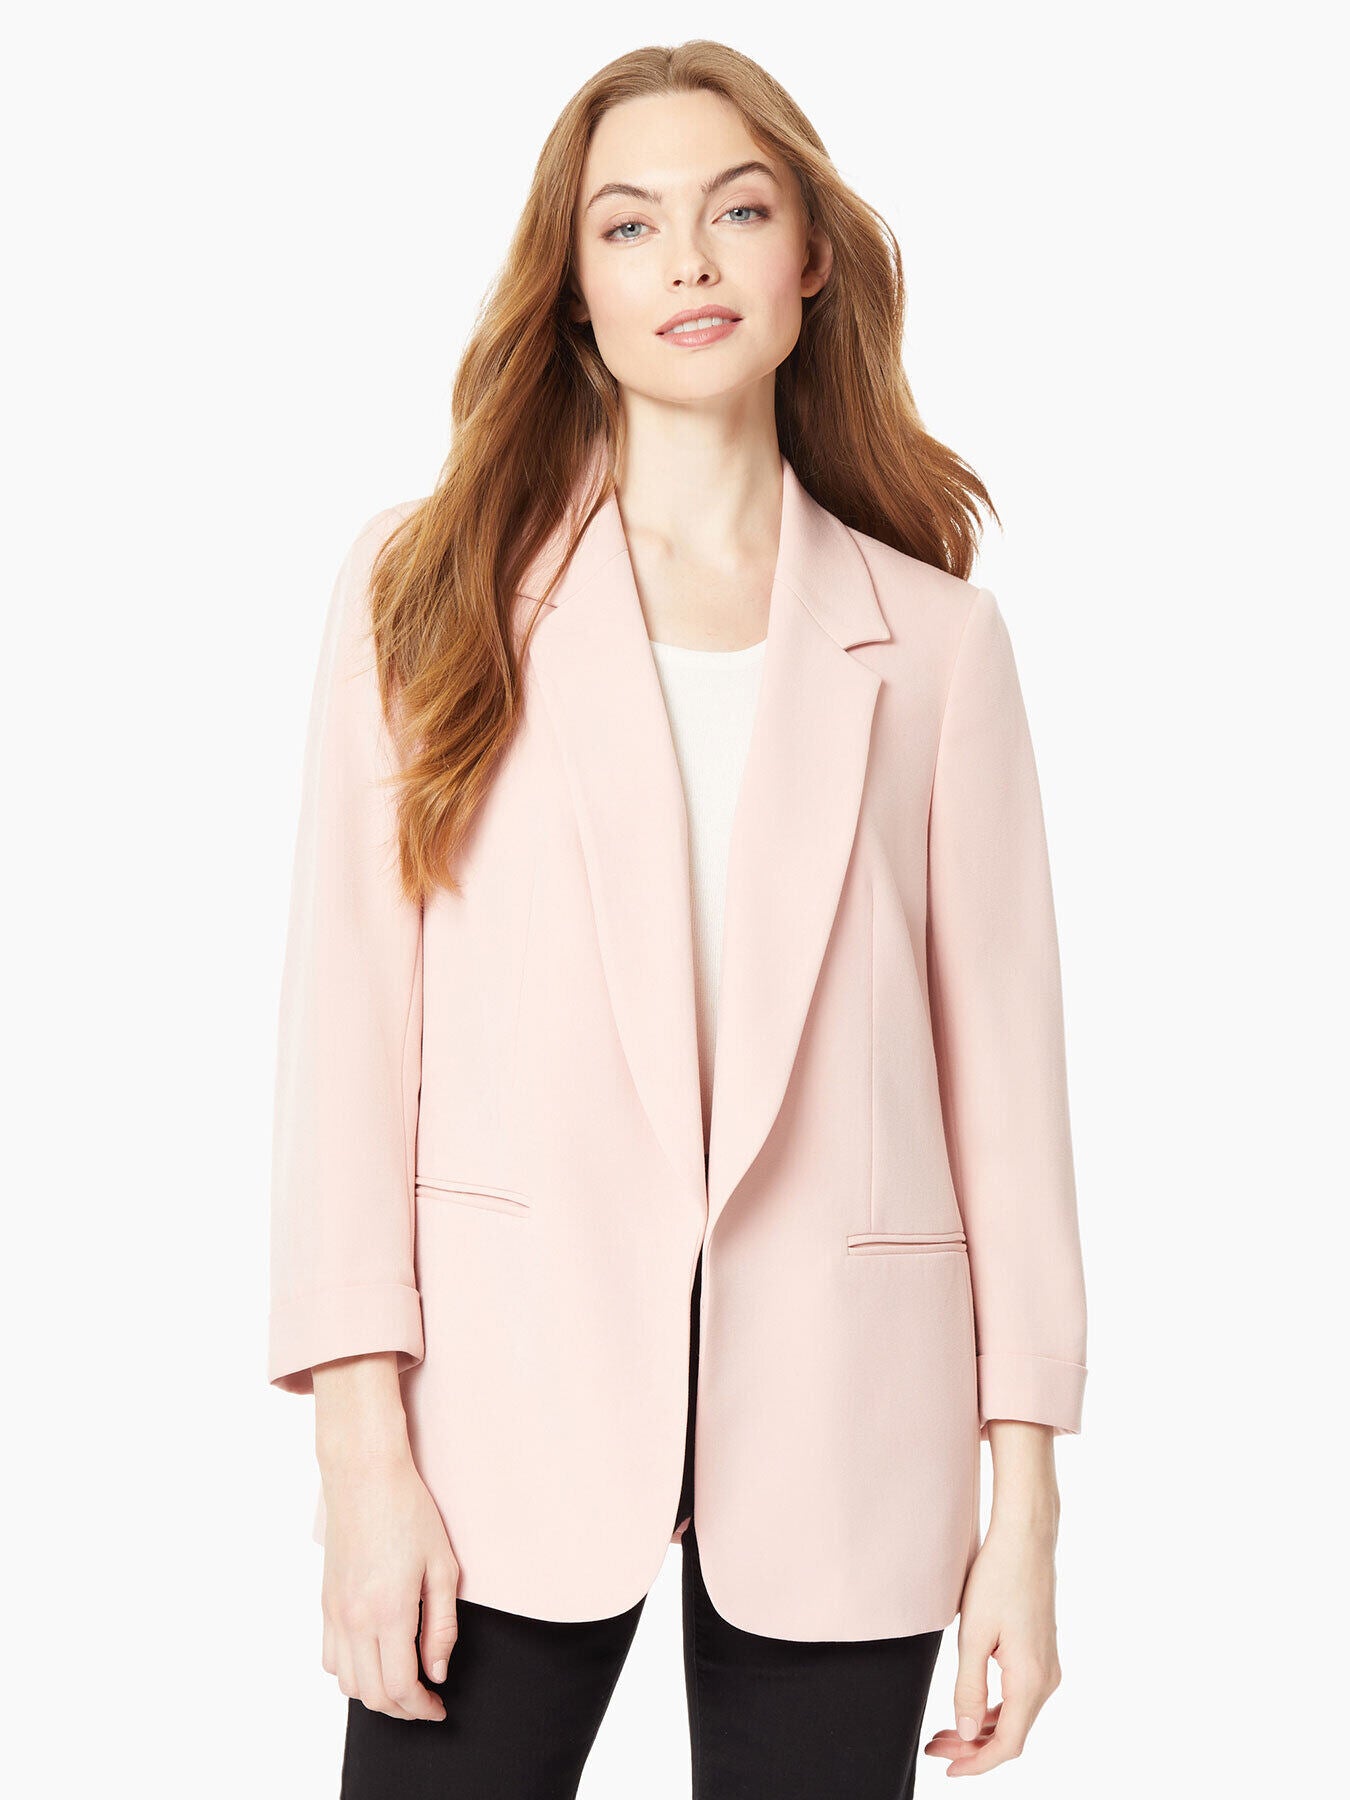 Notch Collar Blazer - Women's Pink Blazer